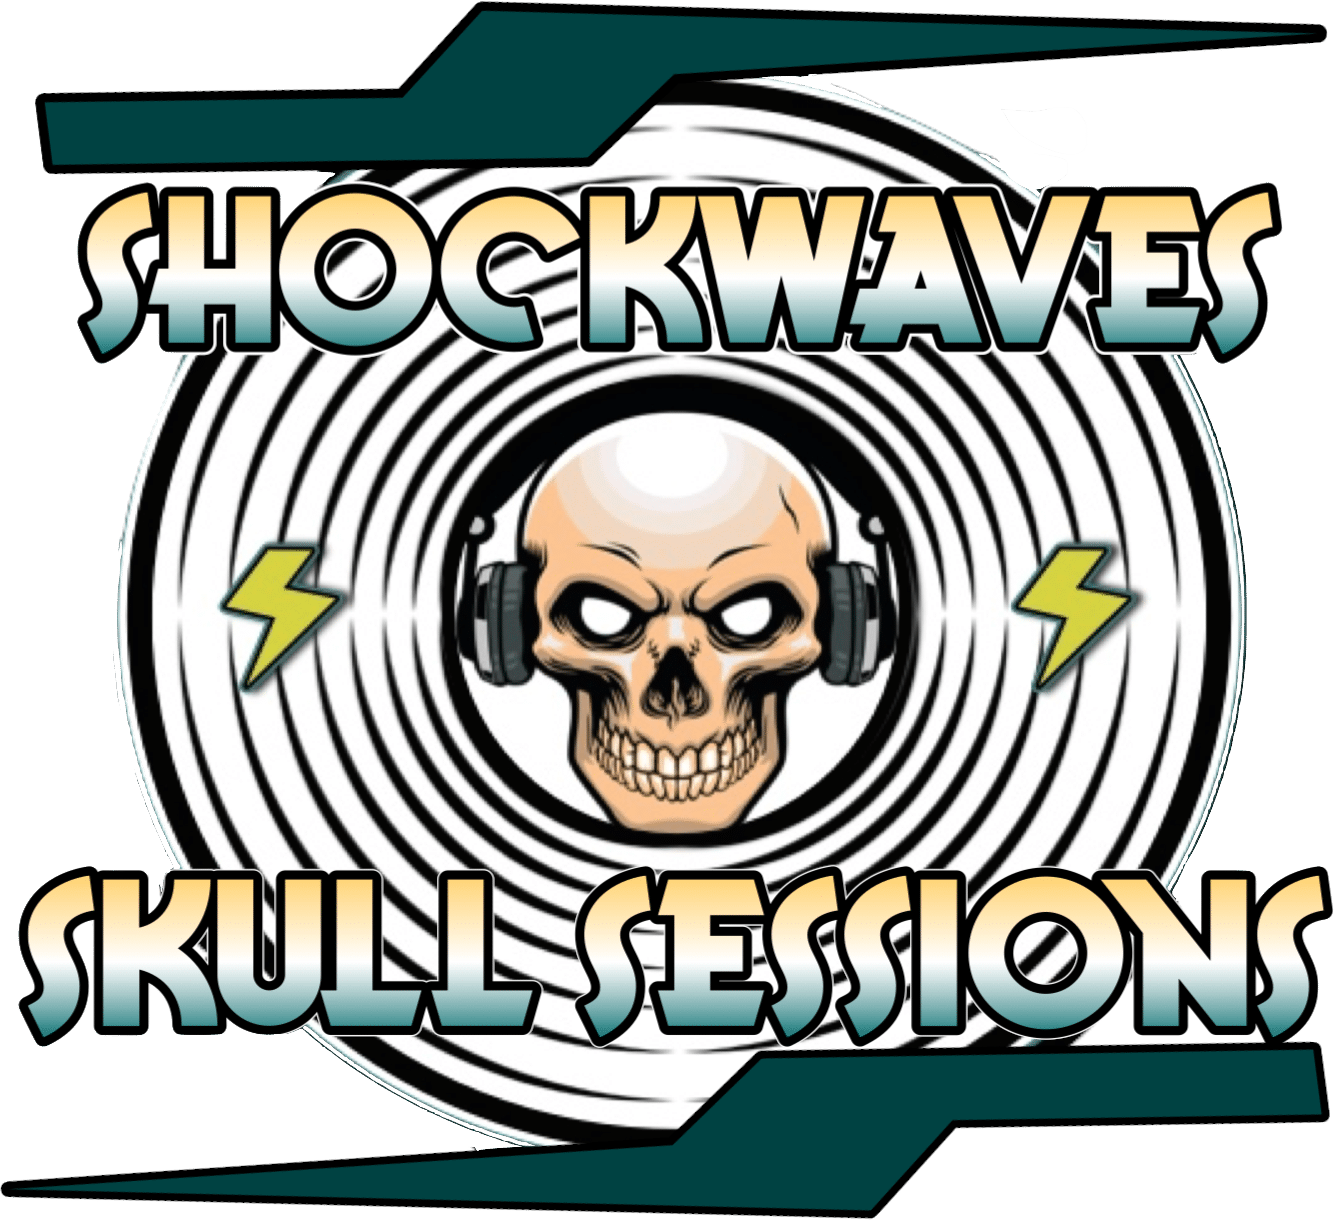 Image: Shockwaves Skullsessions